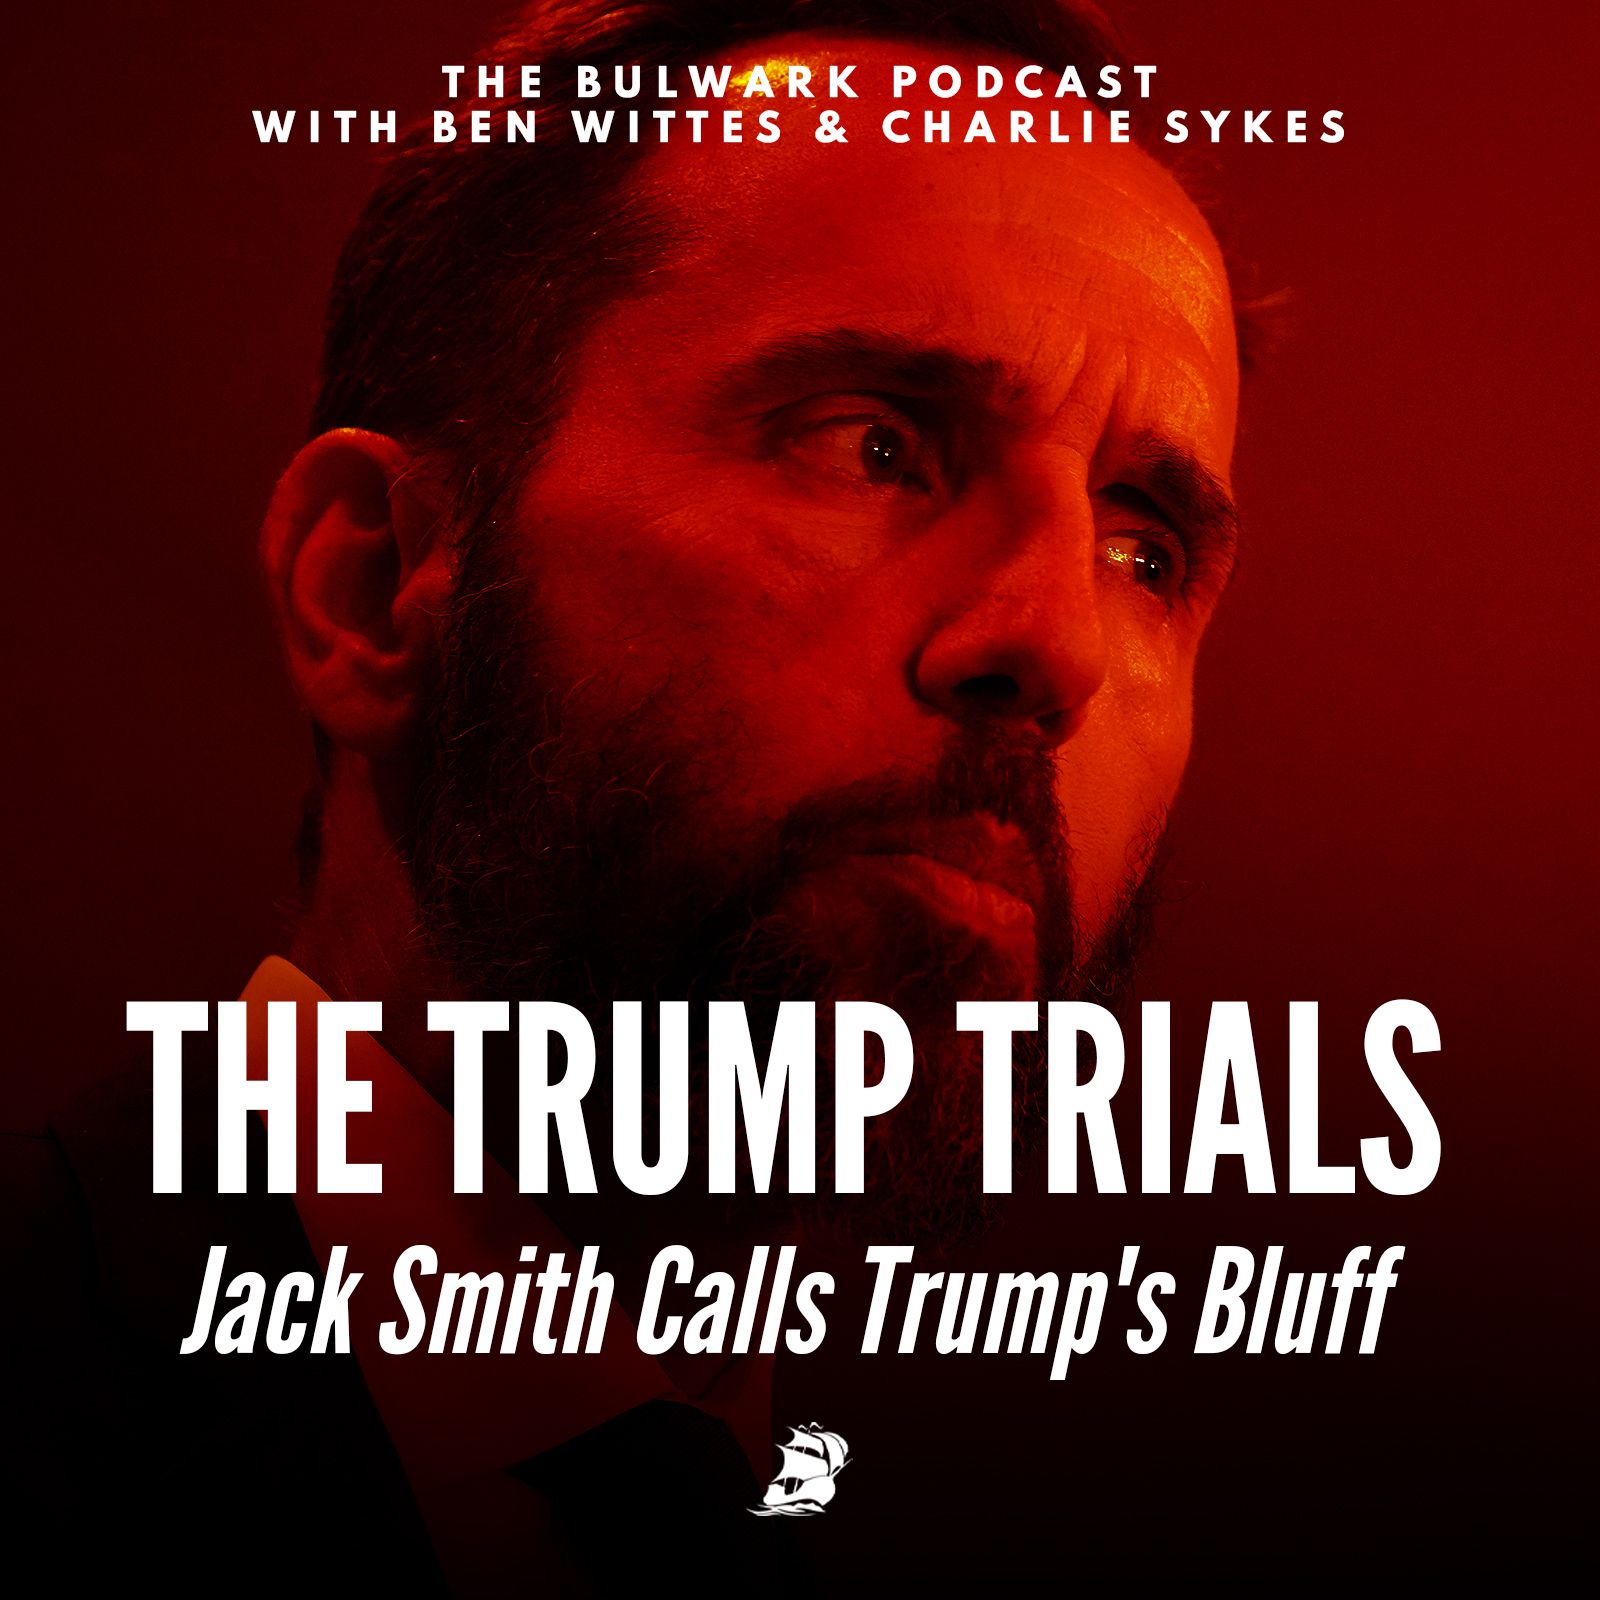 Jack Smith Calls Trump's Bluff